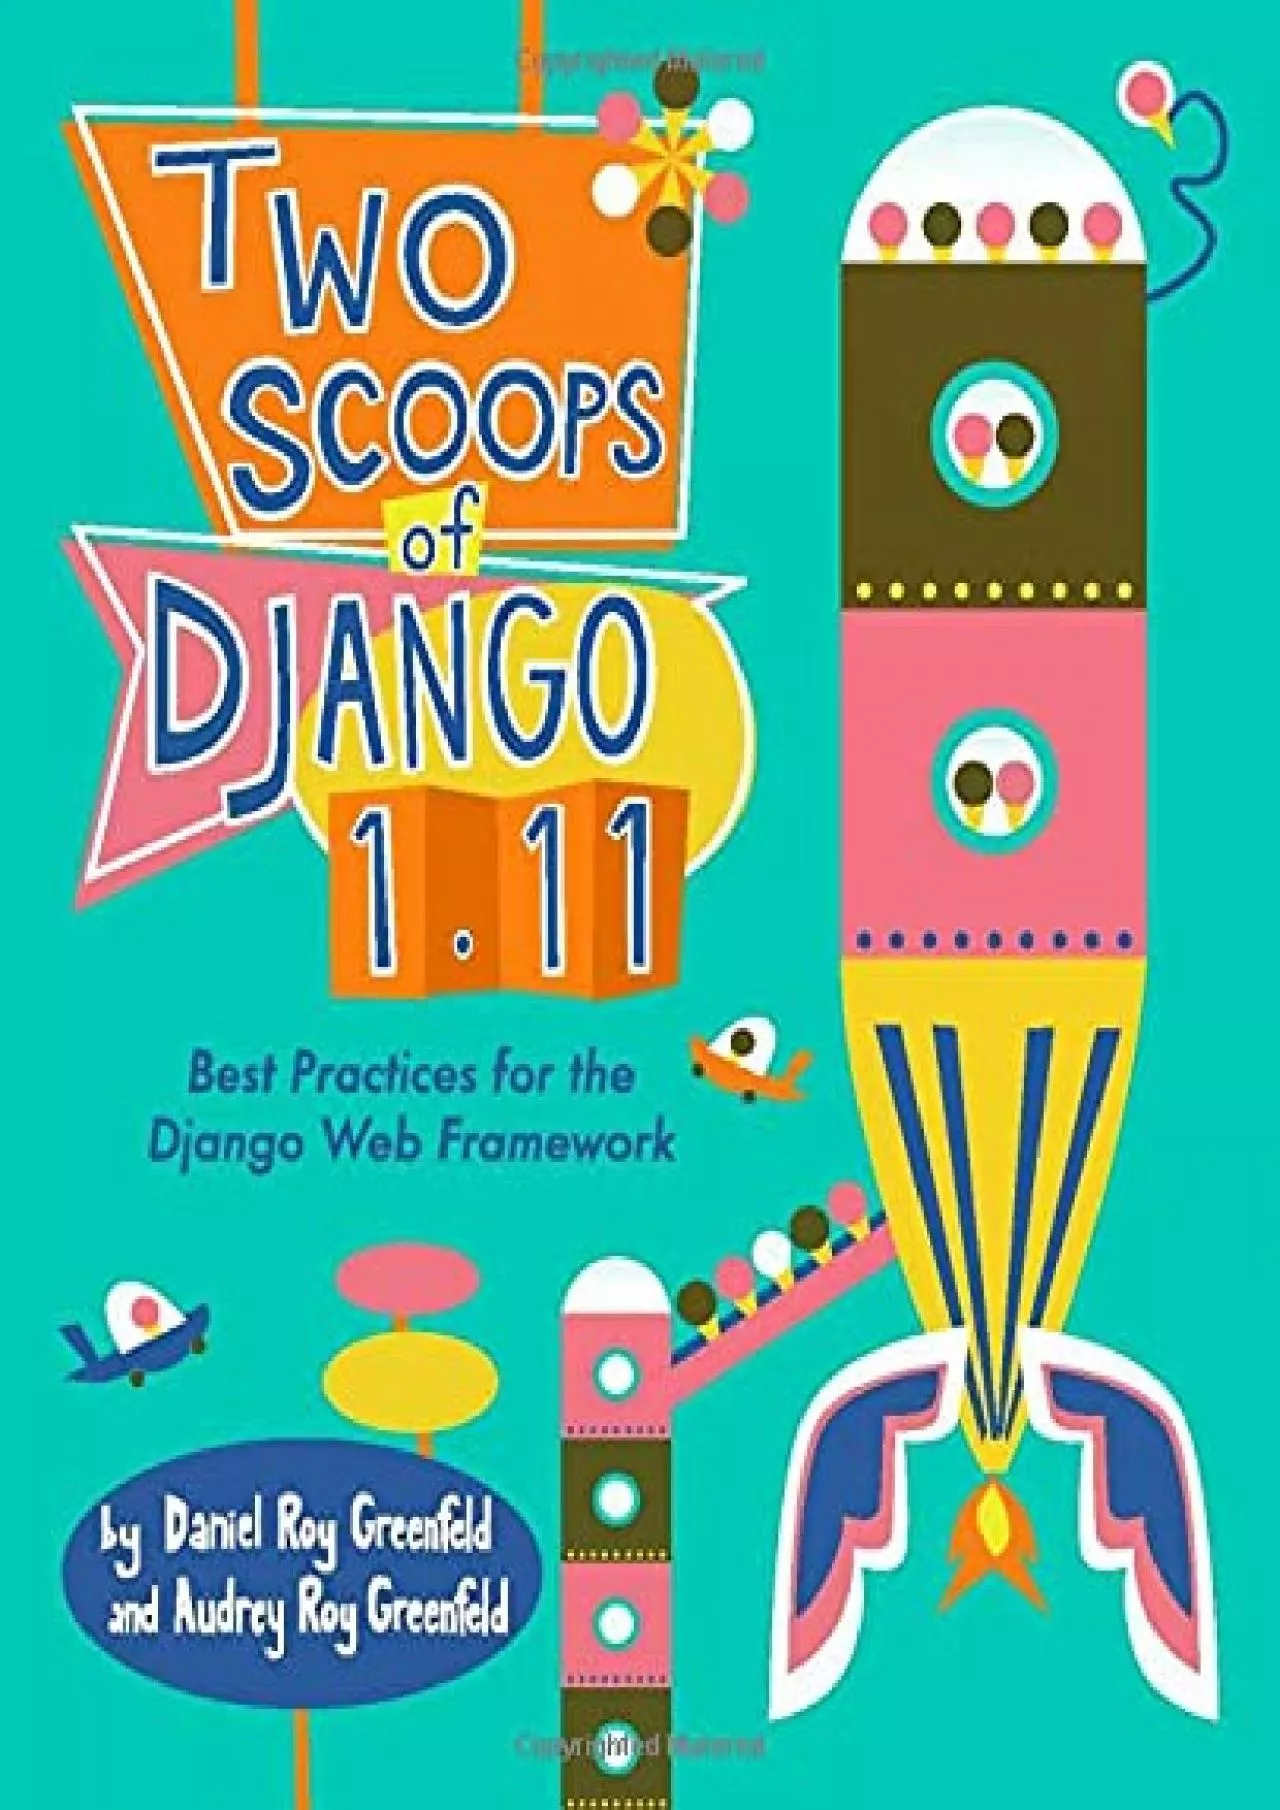 [eBOOK]-Two Scoops of Django 1.11 Best Practices for the Django Web Framework